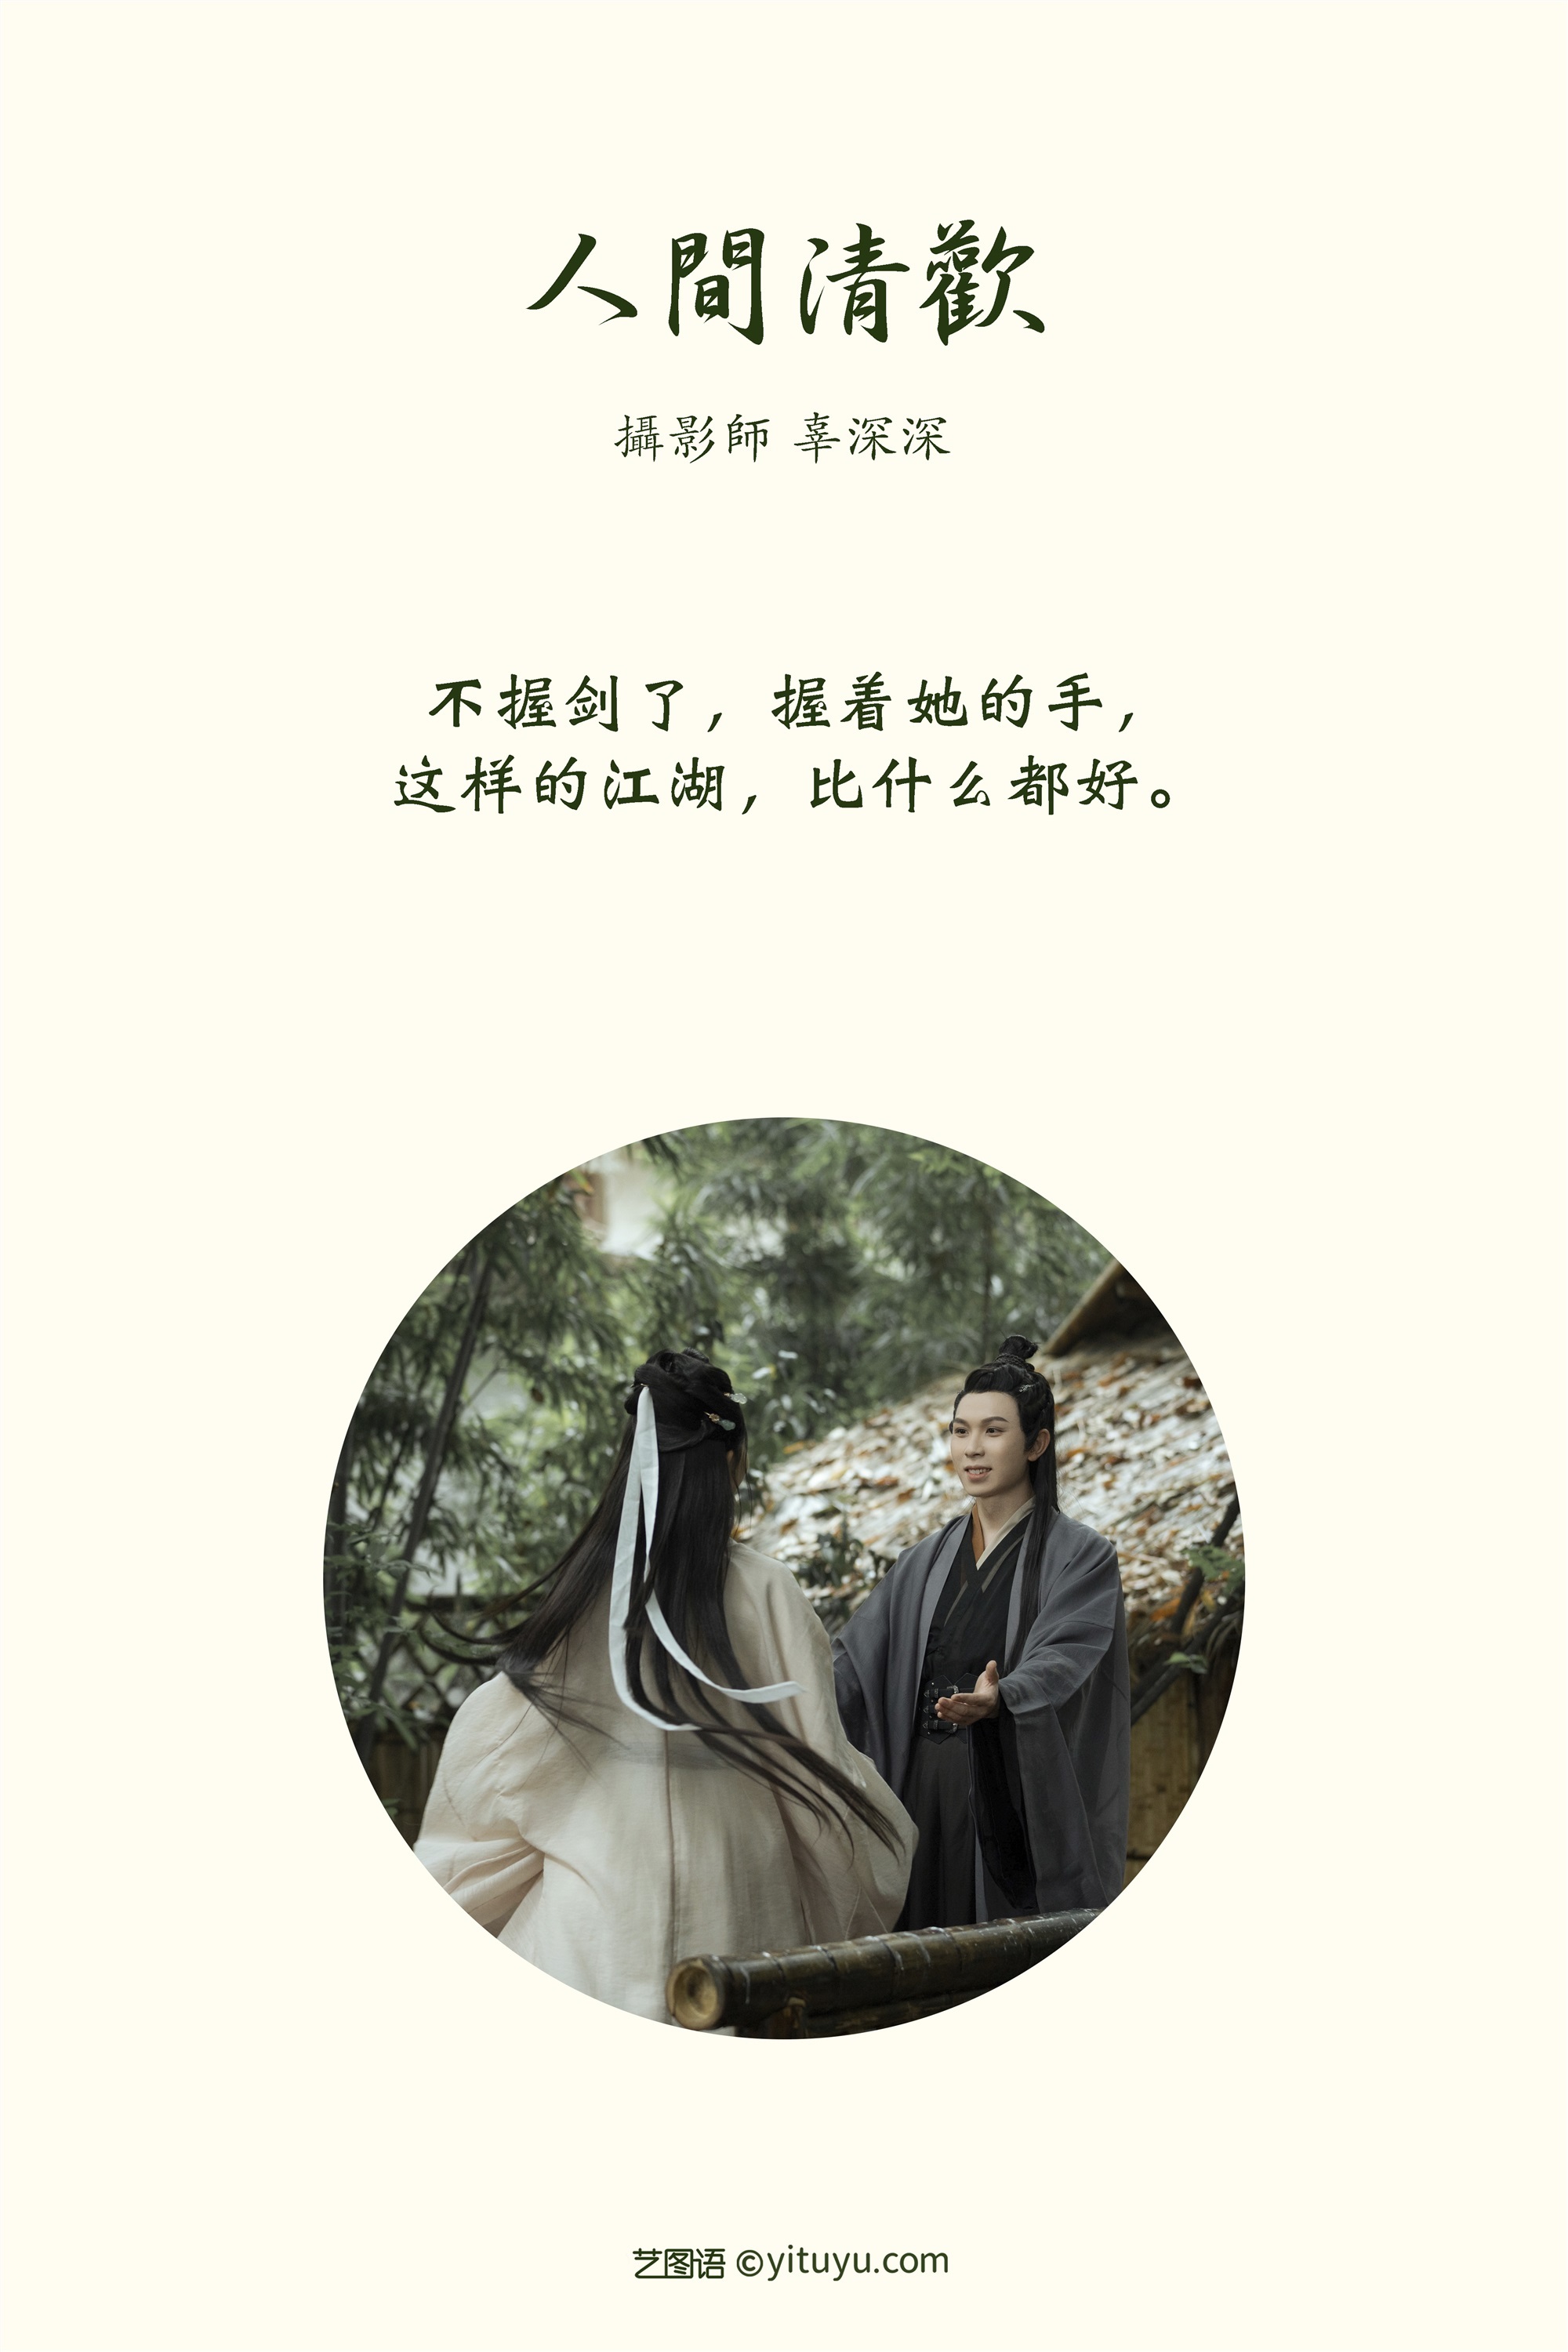 YITUYU art picture language 2021.08.21 Human Qinghuan model collection